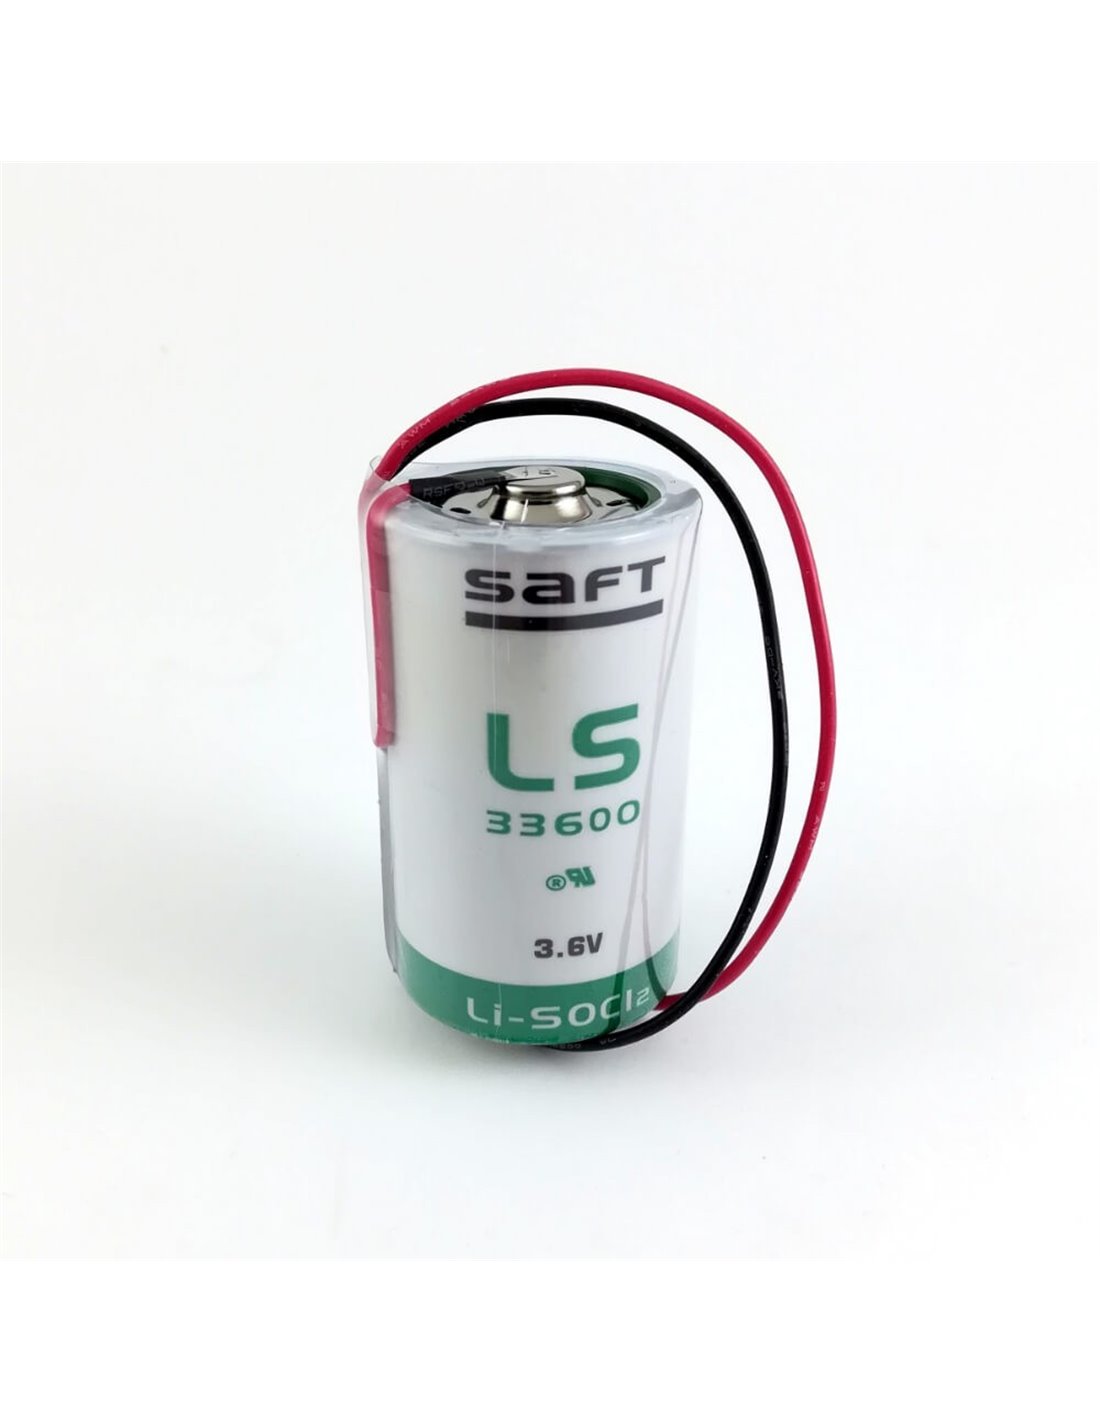 Pile lithium 3.6v LS33600